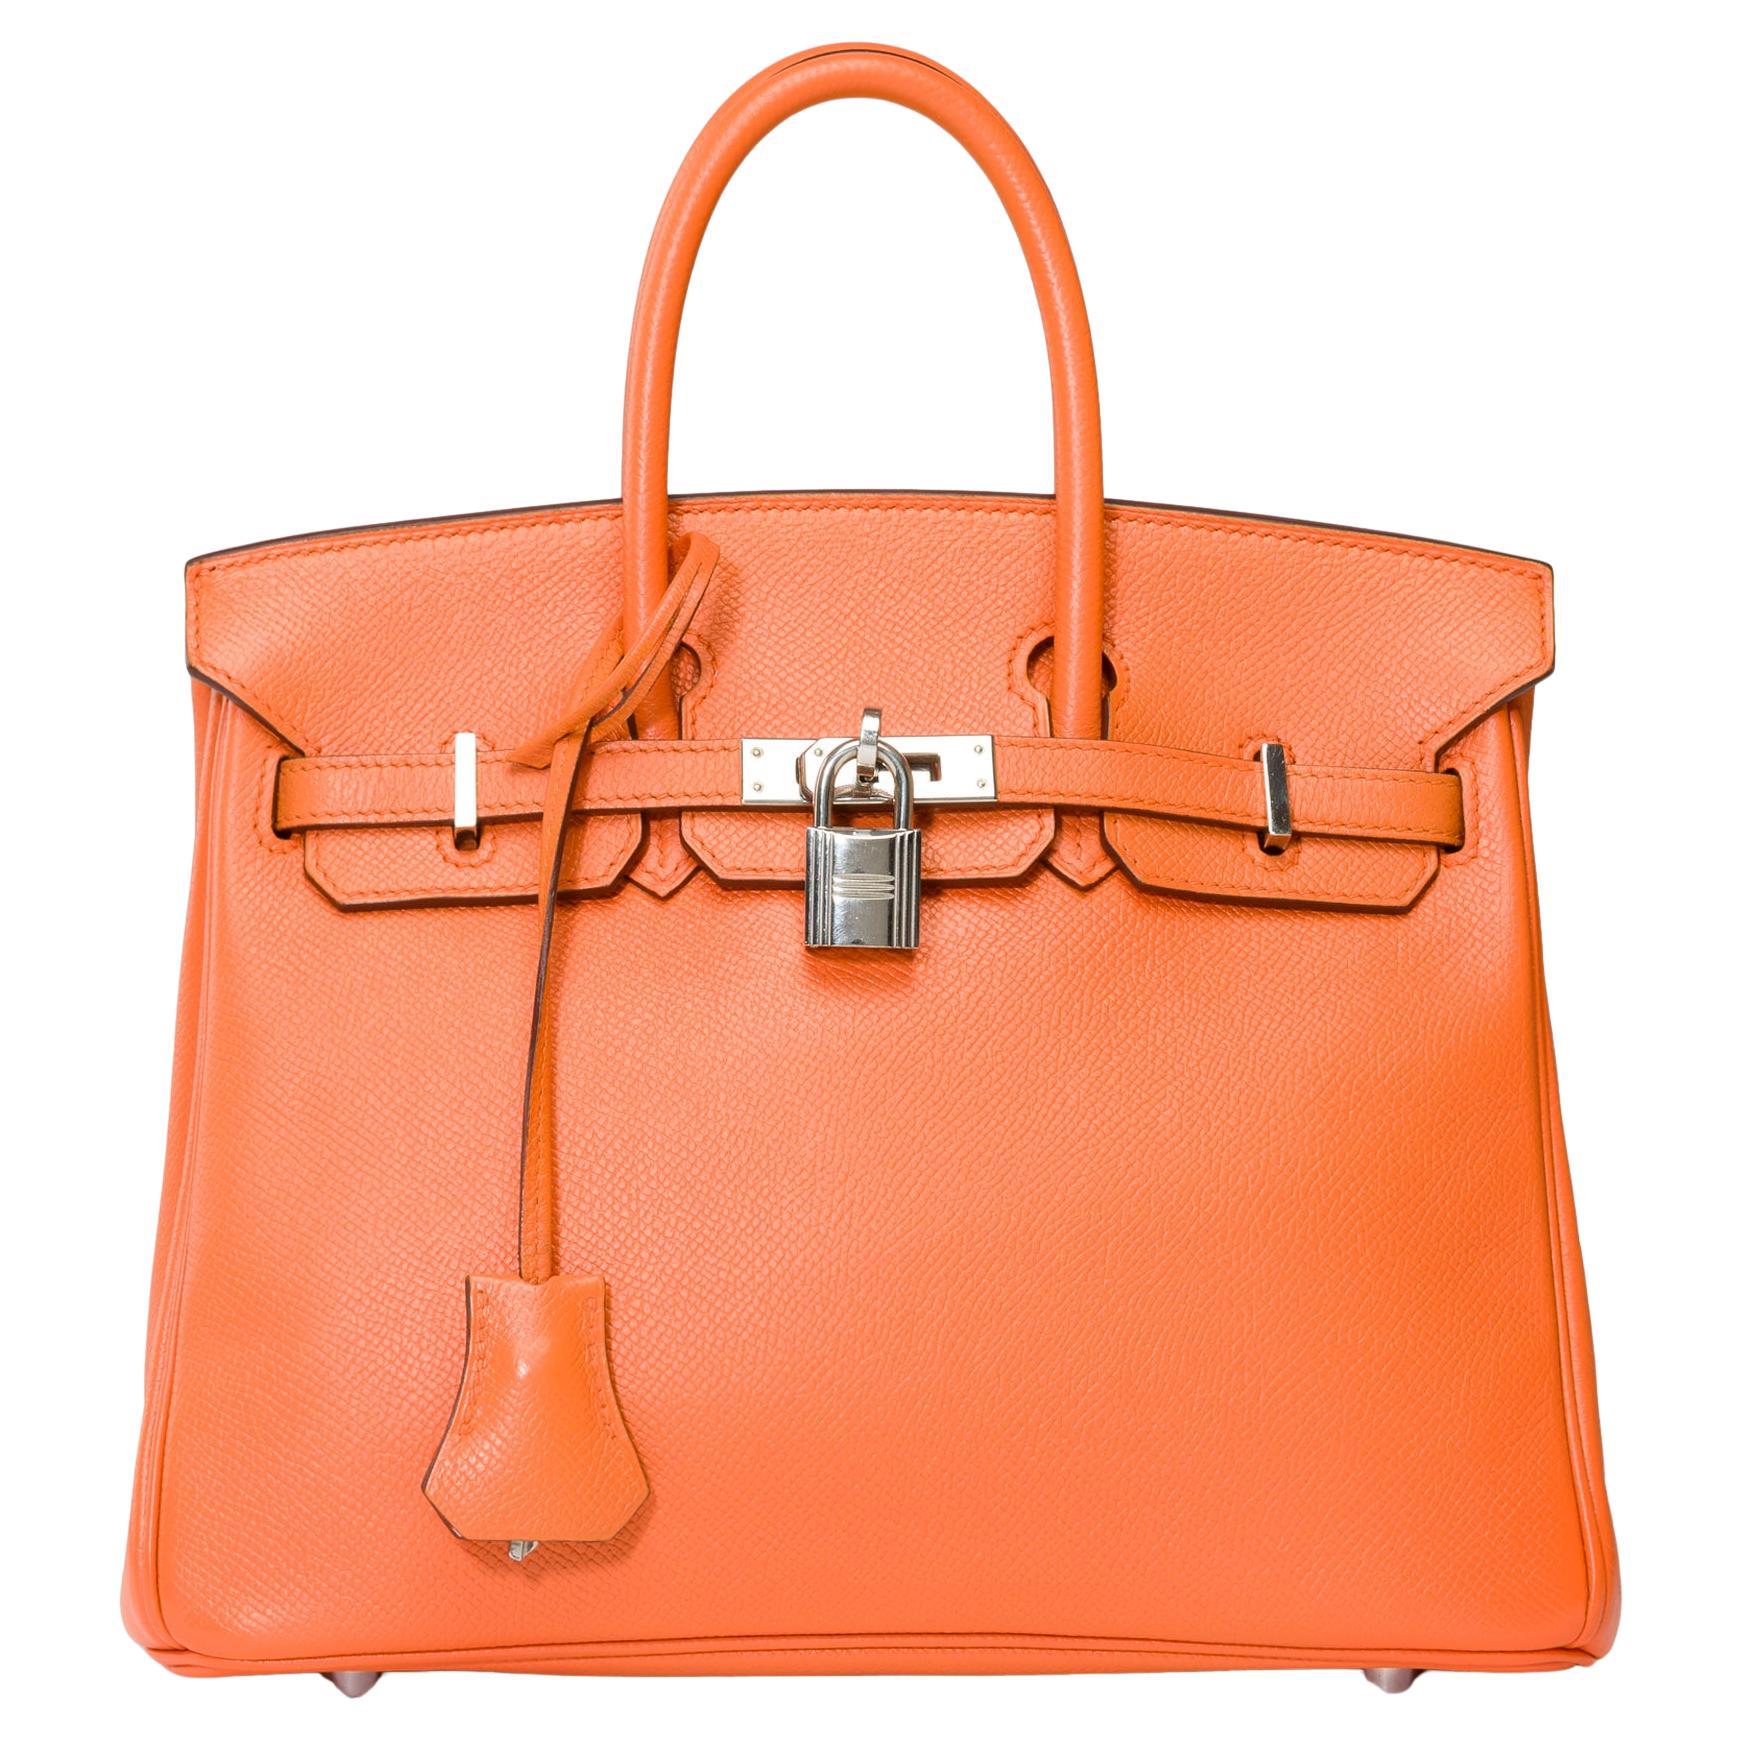 Bright Hermes Birkin 25cm handbag in Orange Epsom calf leather, SHW For Sale